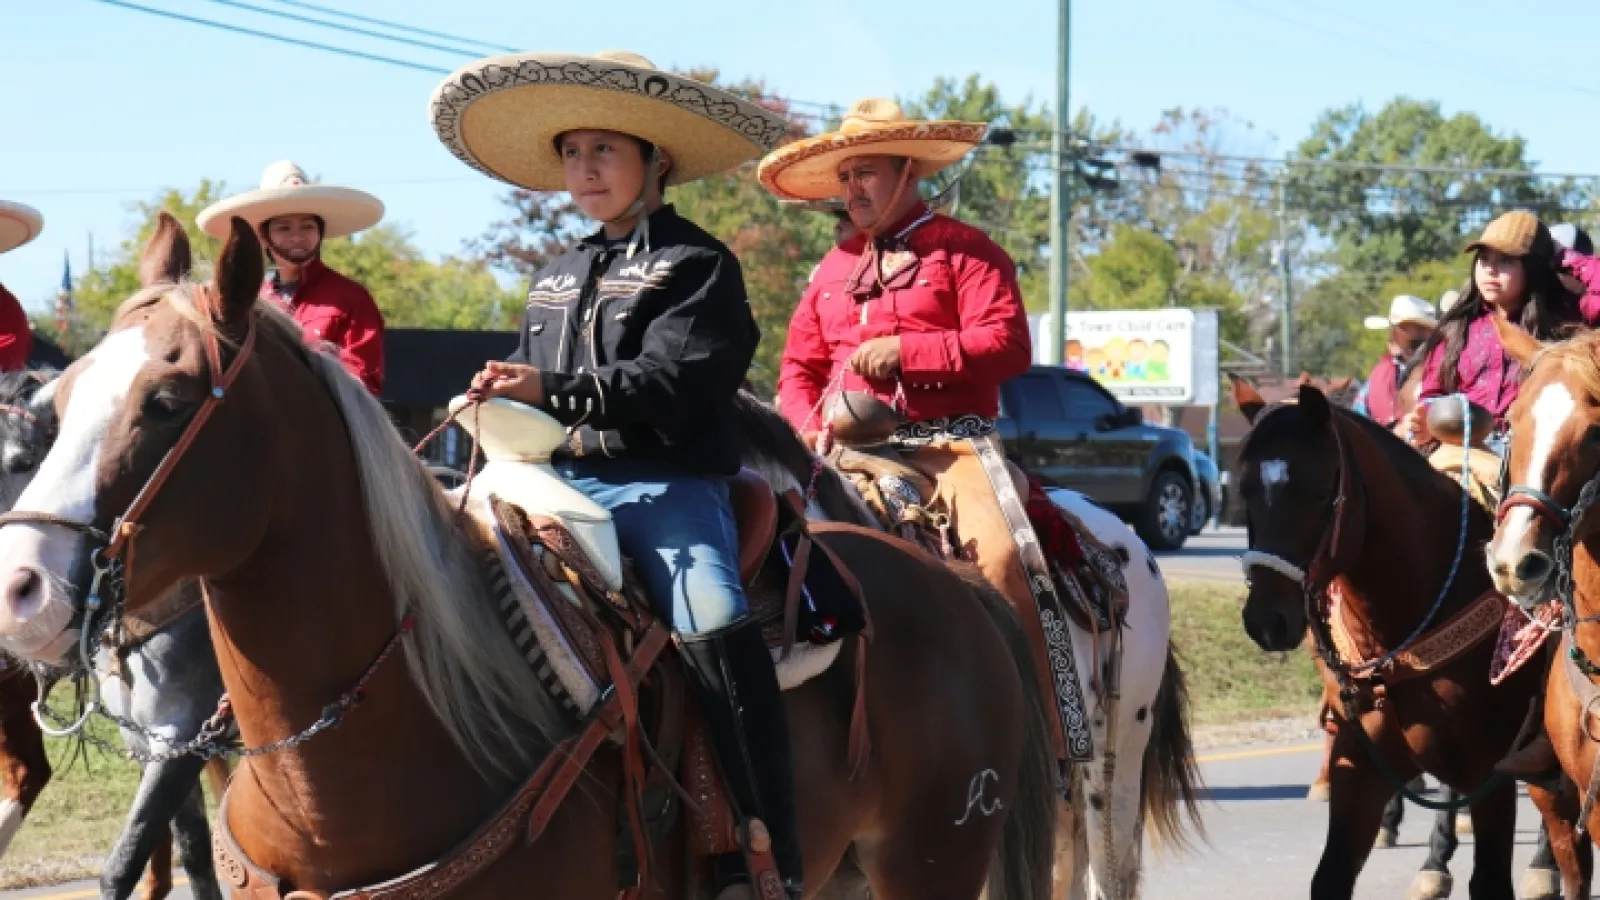 Cowboys and cowgirls riding horseback